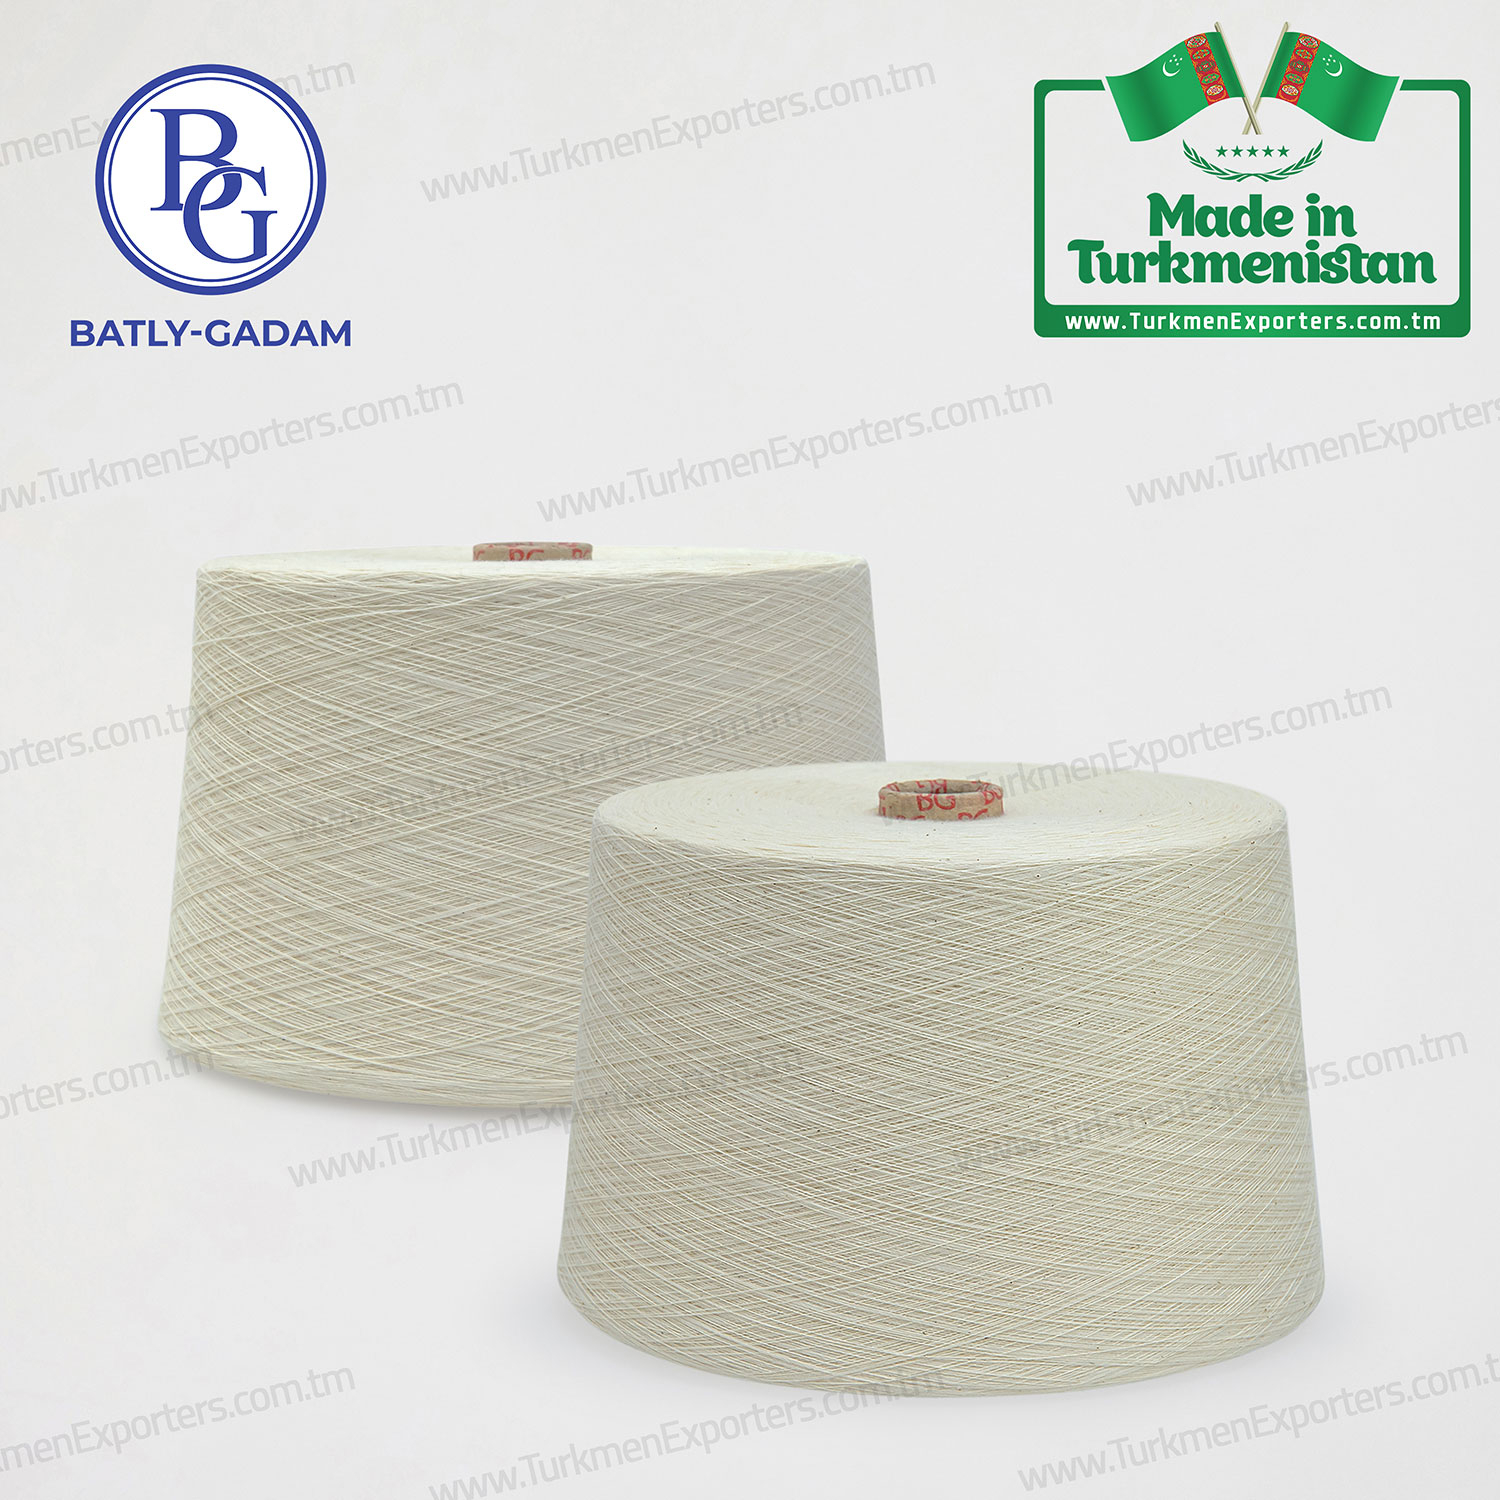 Cotton yarn wholesale for export from Turkmenistan | Batly Gadam individual enterprise